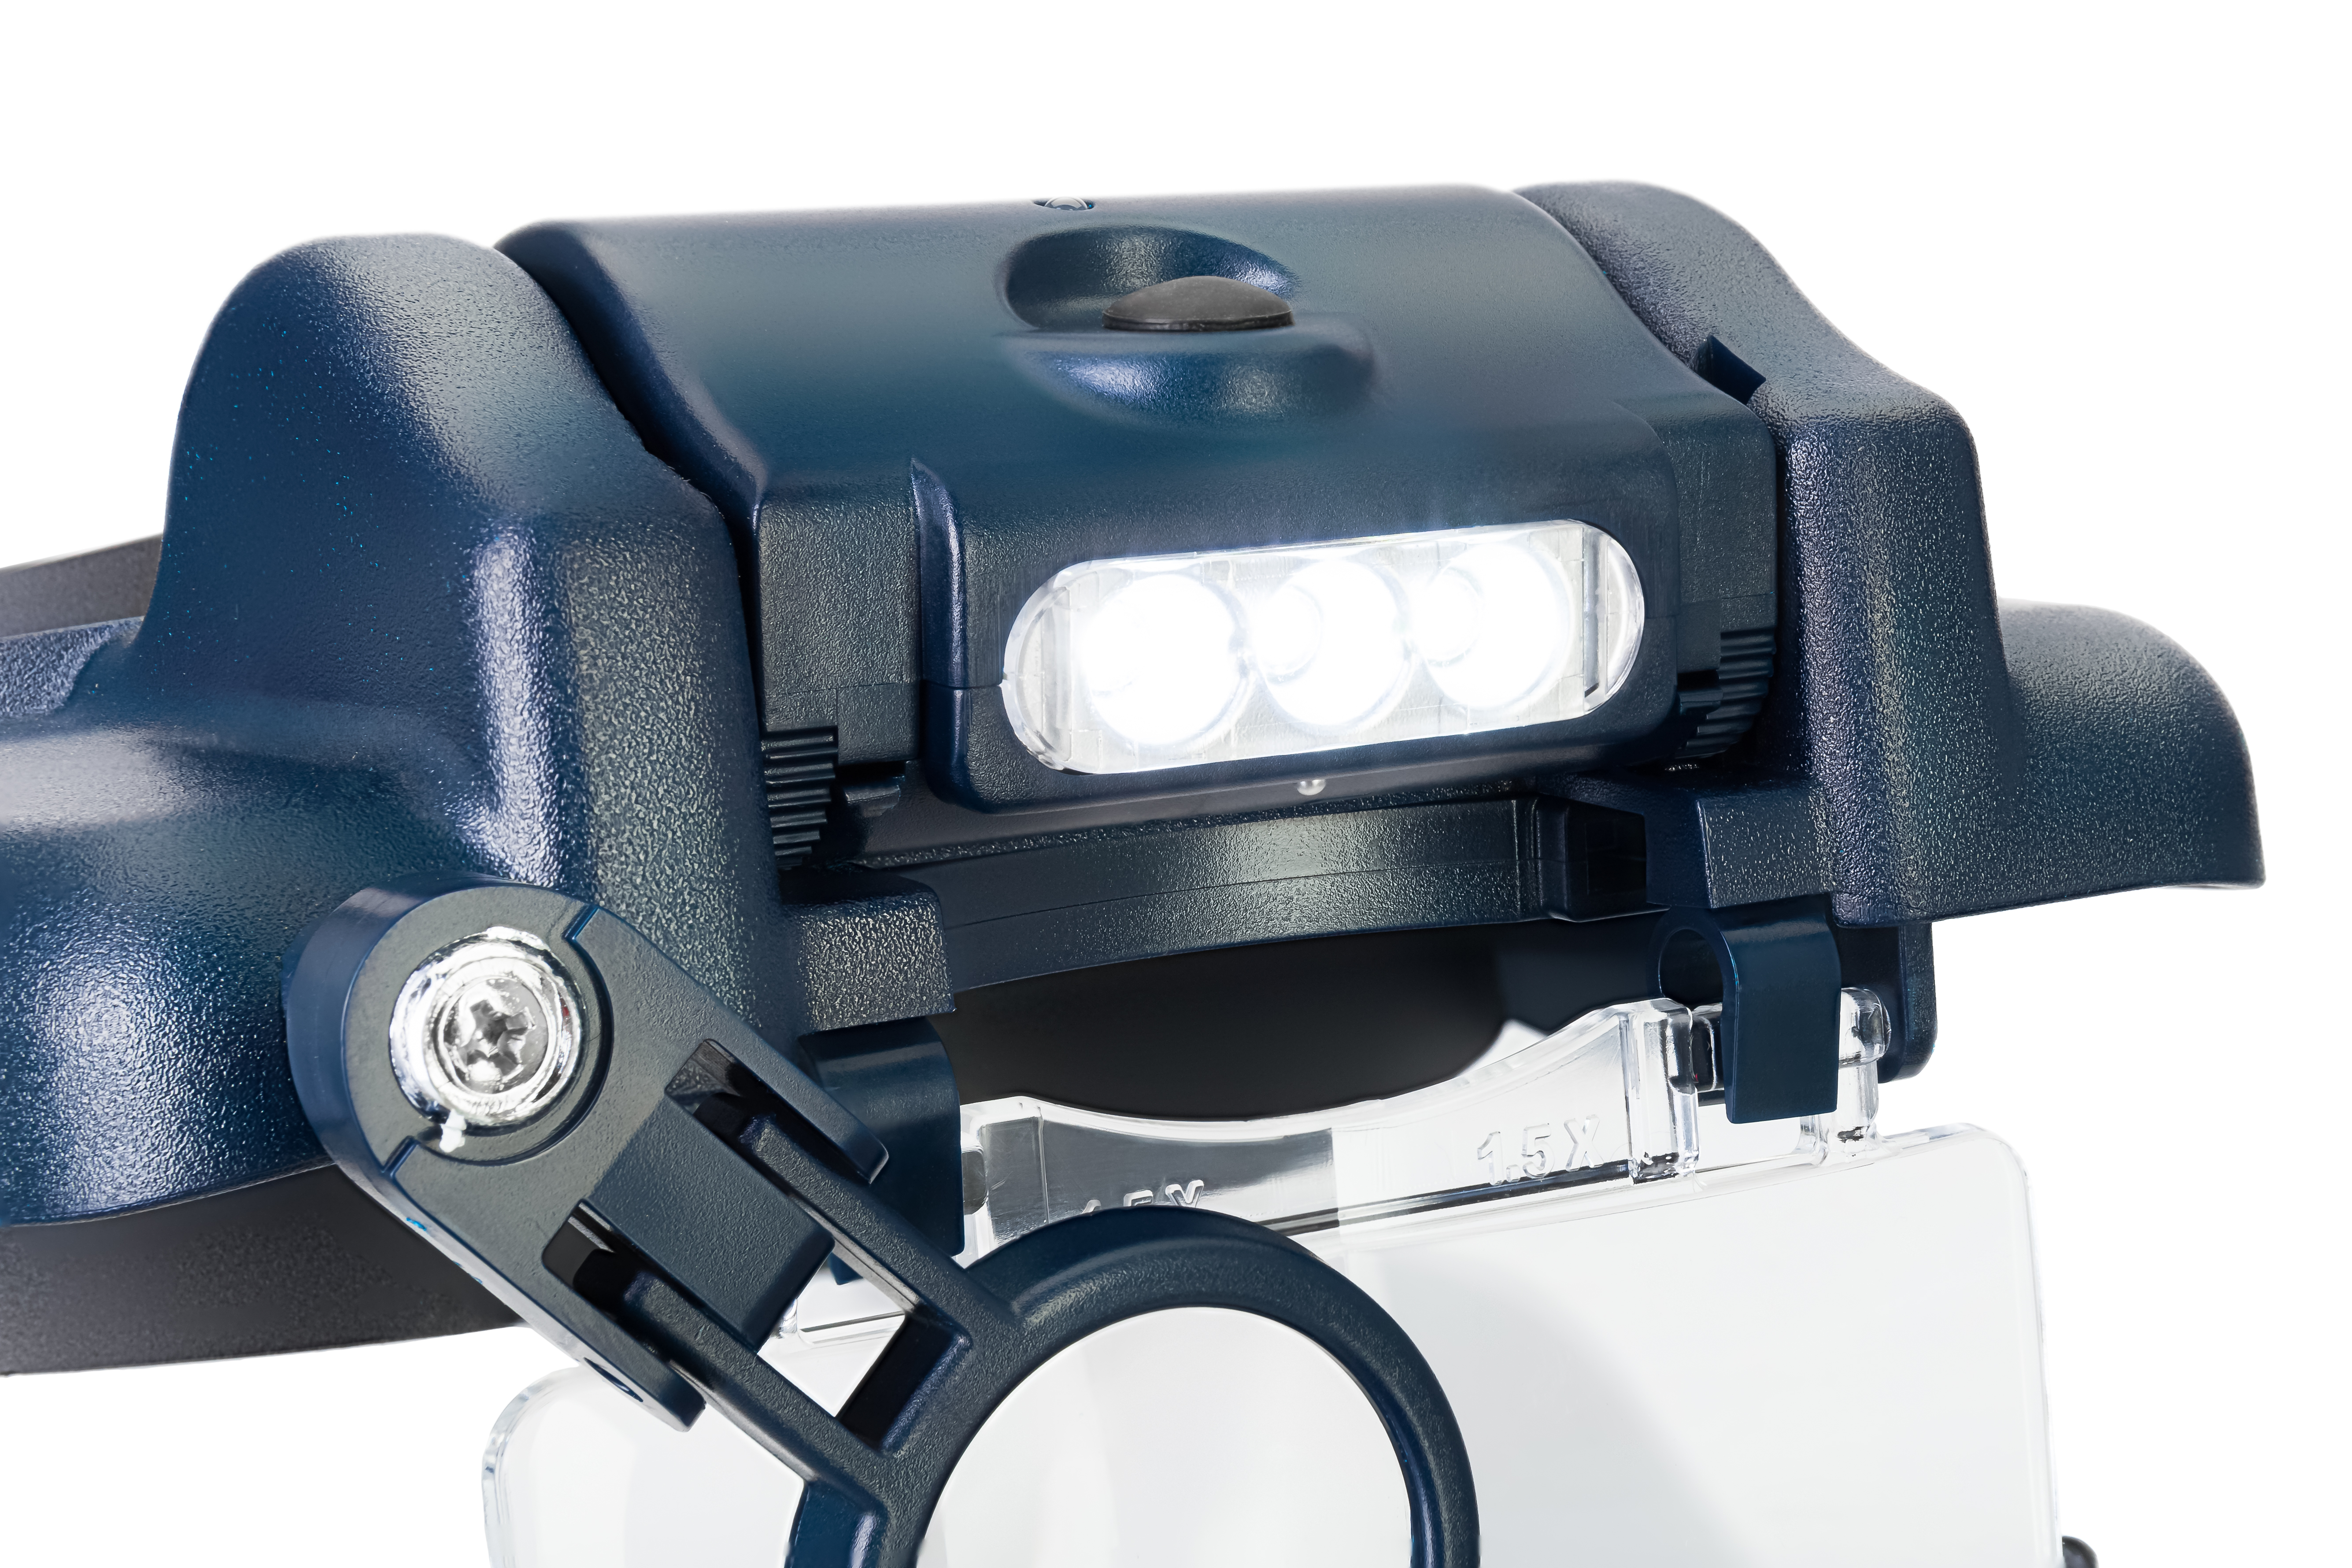 N�hlavn� lupa Discovery Crafts DHR 10 s LED osvetlen�m je ide�lna pre v�etk�ch u��vate�ov, ktor� vy�aduj� maxim�lnu flexibilitu a presnos� pr�ce.